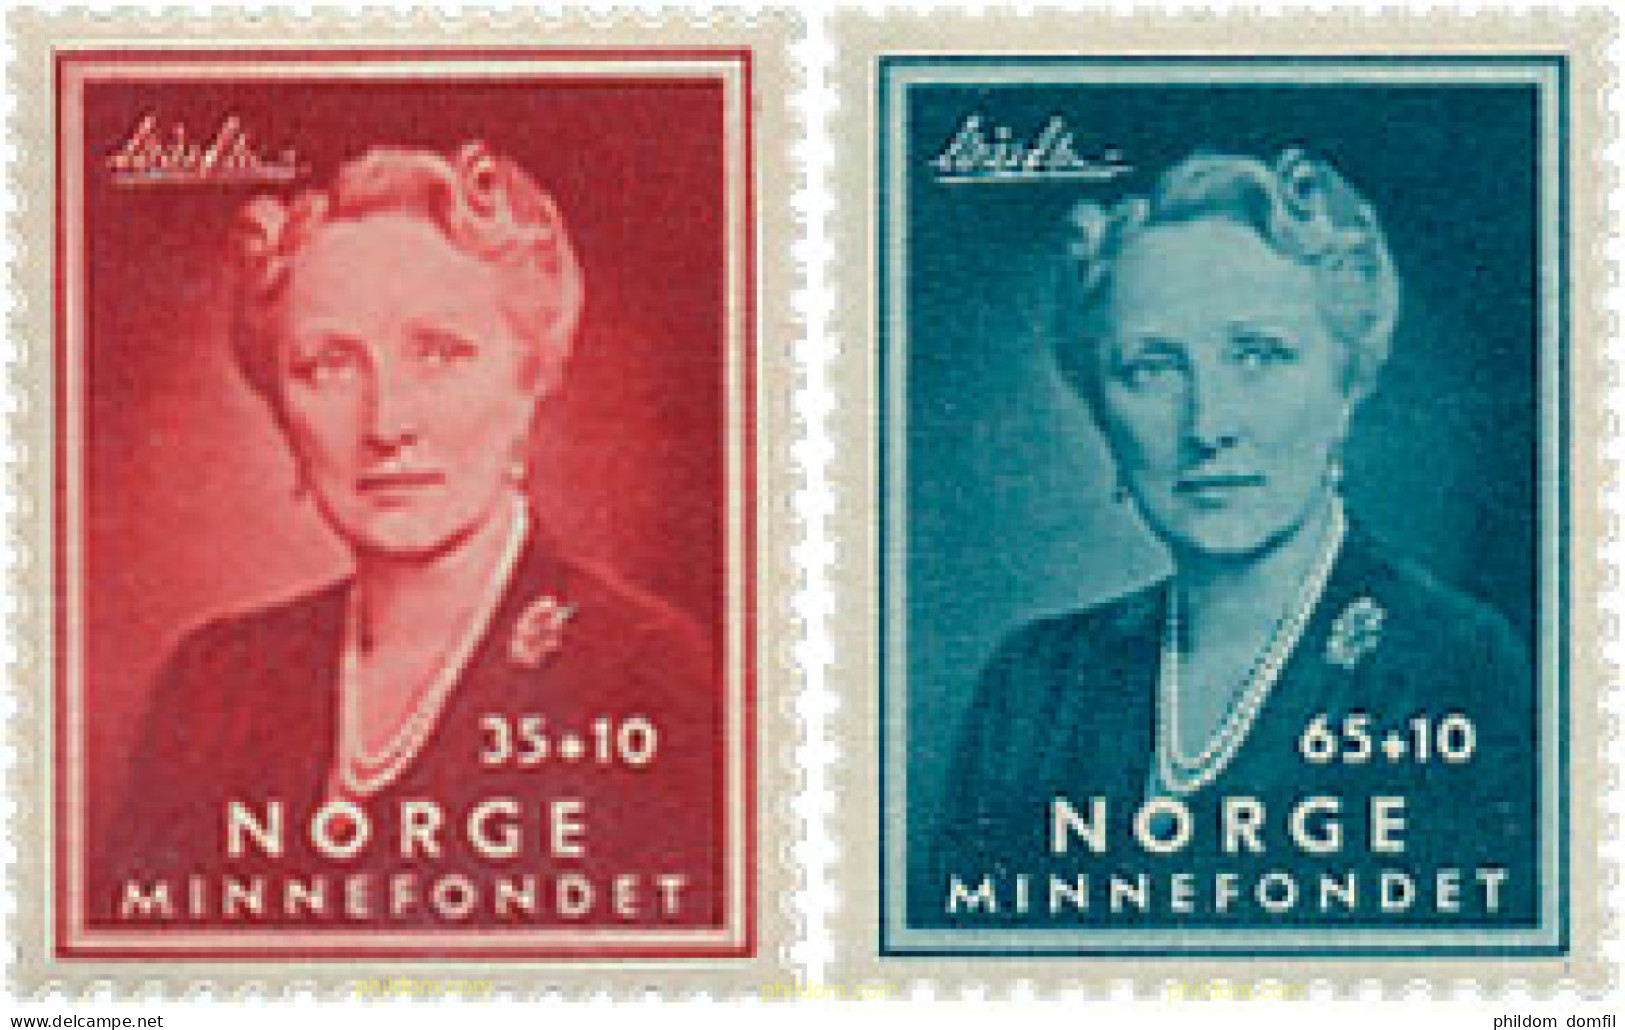 672760 HINGED NORUEGA 1956 PRO FONDO PRINCESA MARTHA - Used Stamps